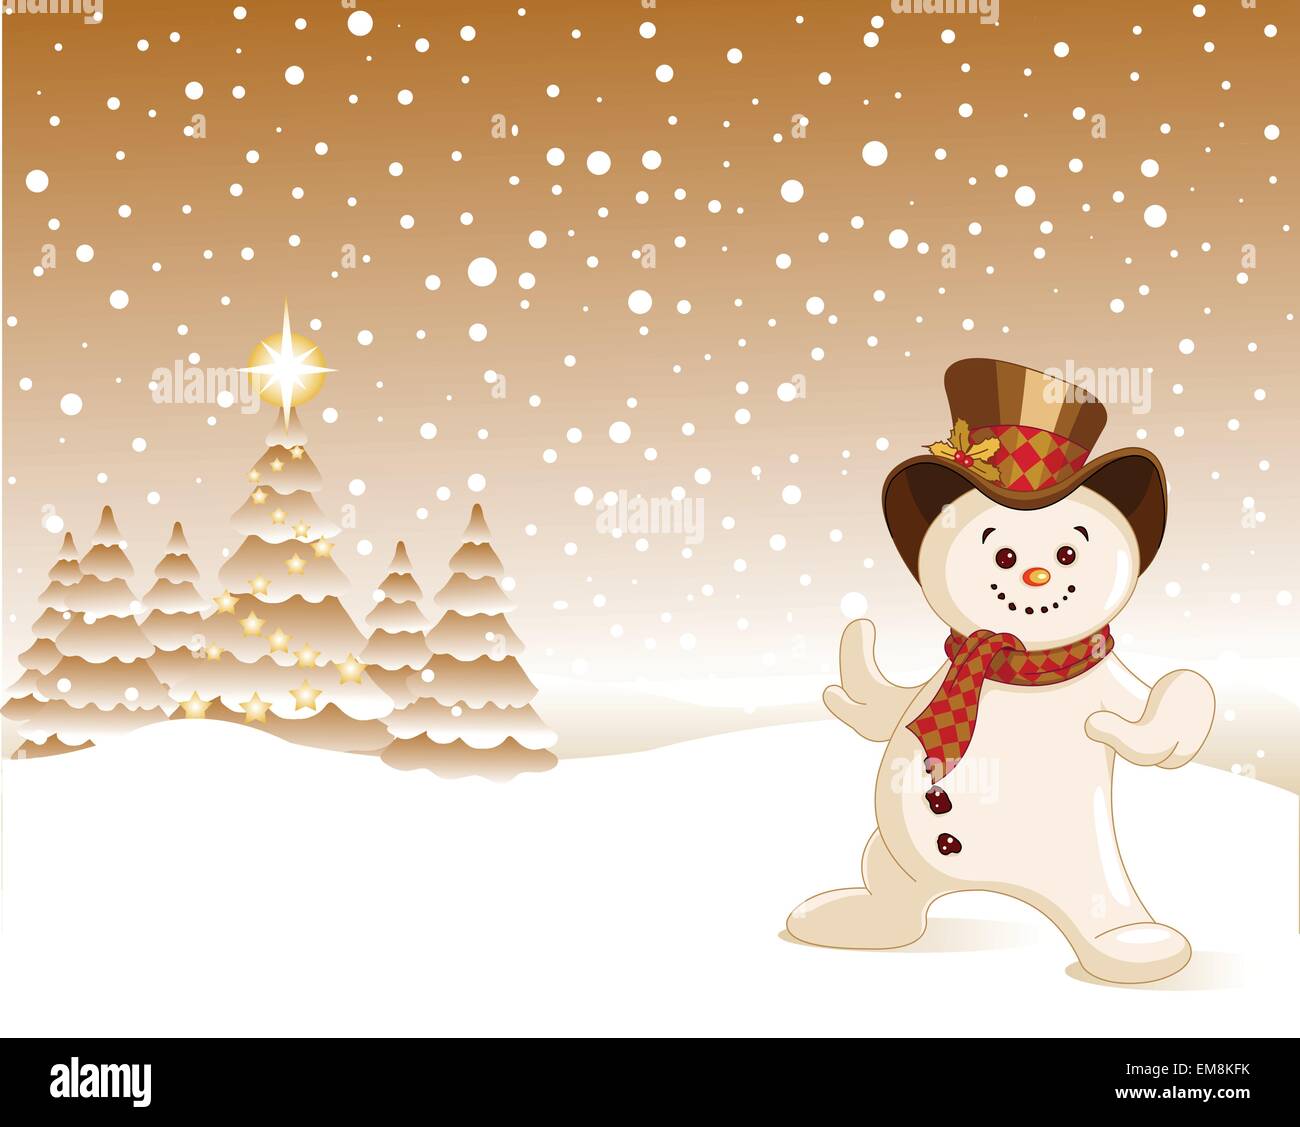 Snowman Christmas background Stock Vector